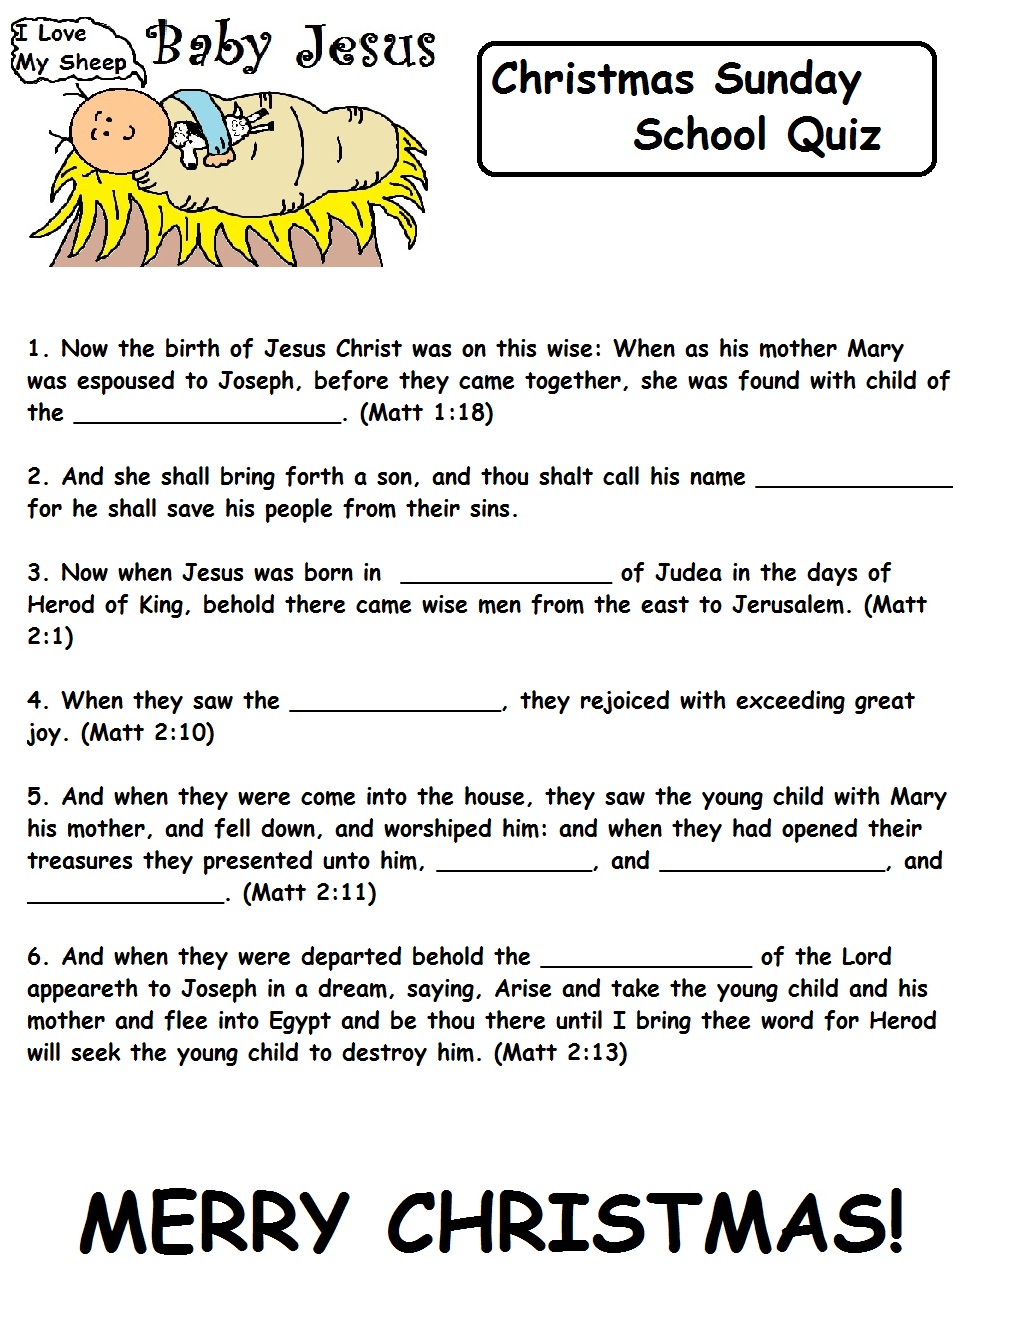 32 Fun Bible Trivia Questions - Kitty Baby Love